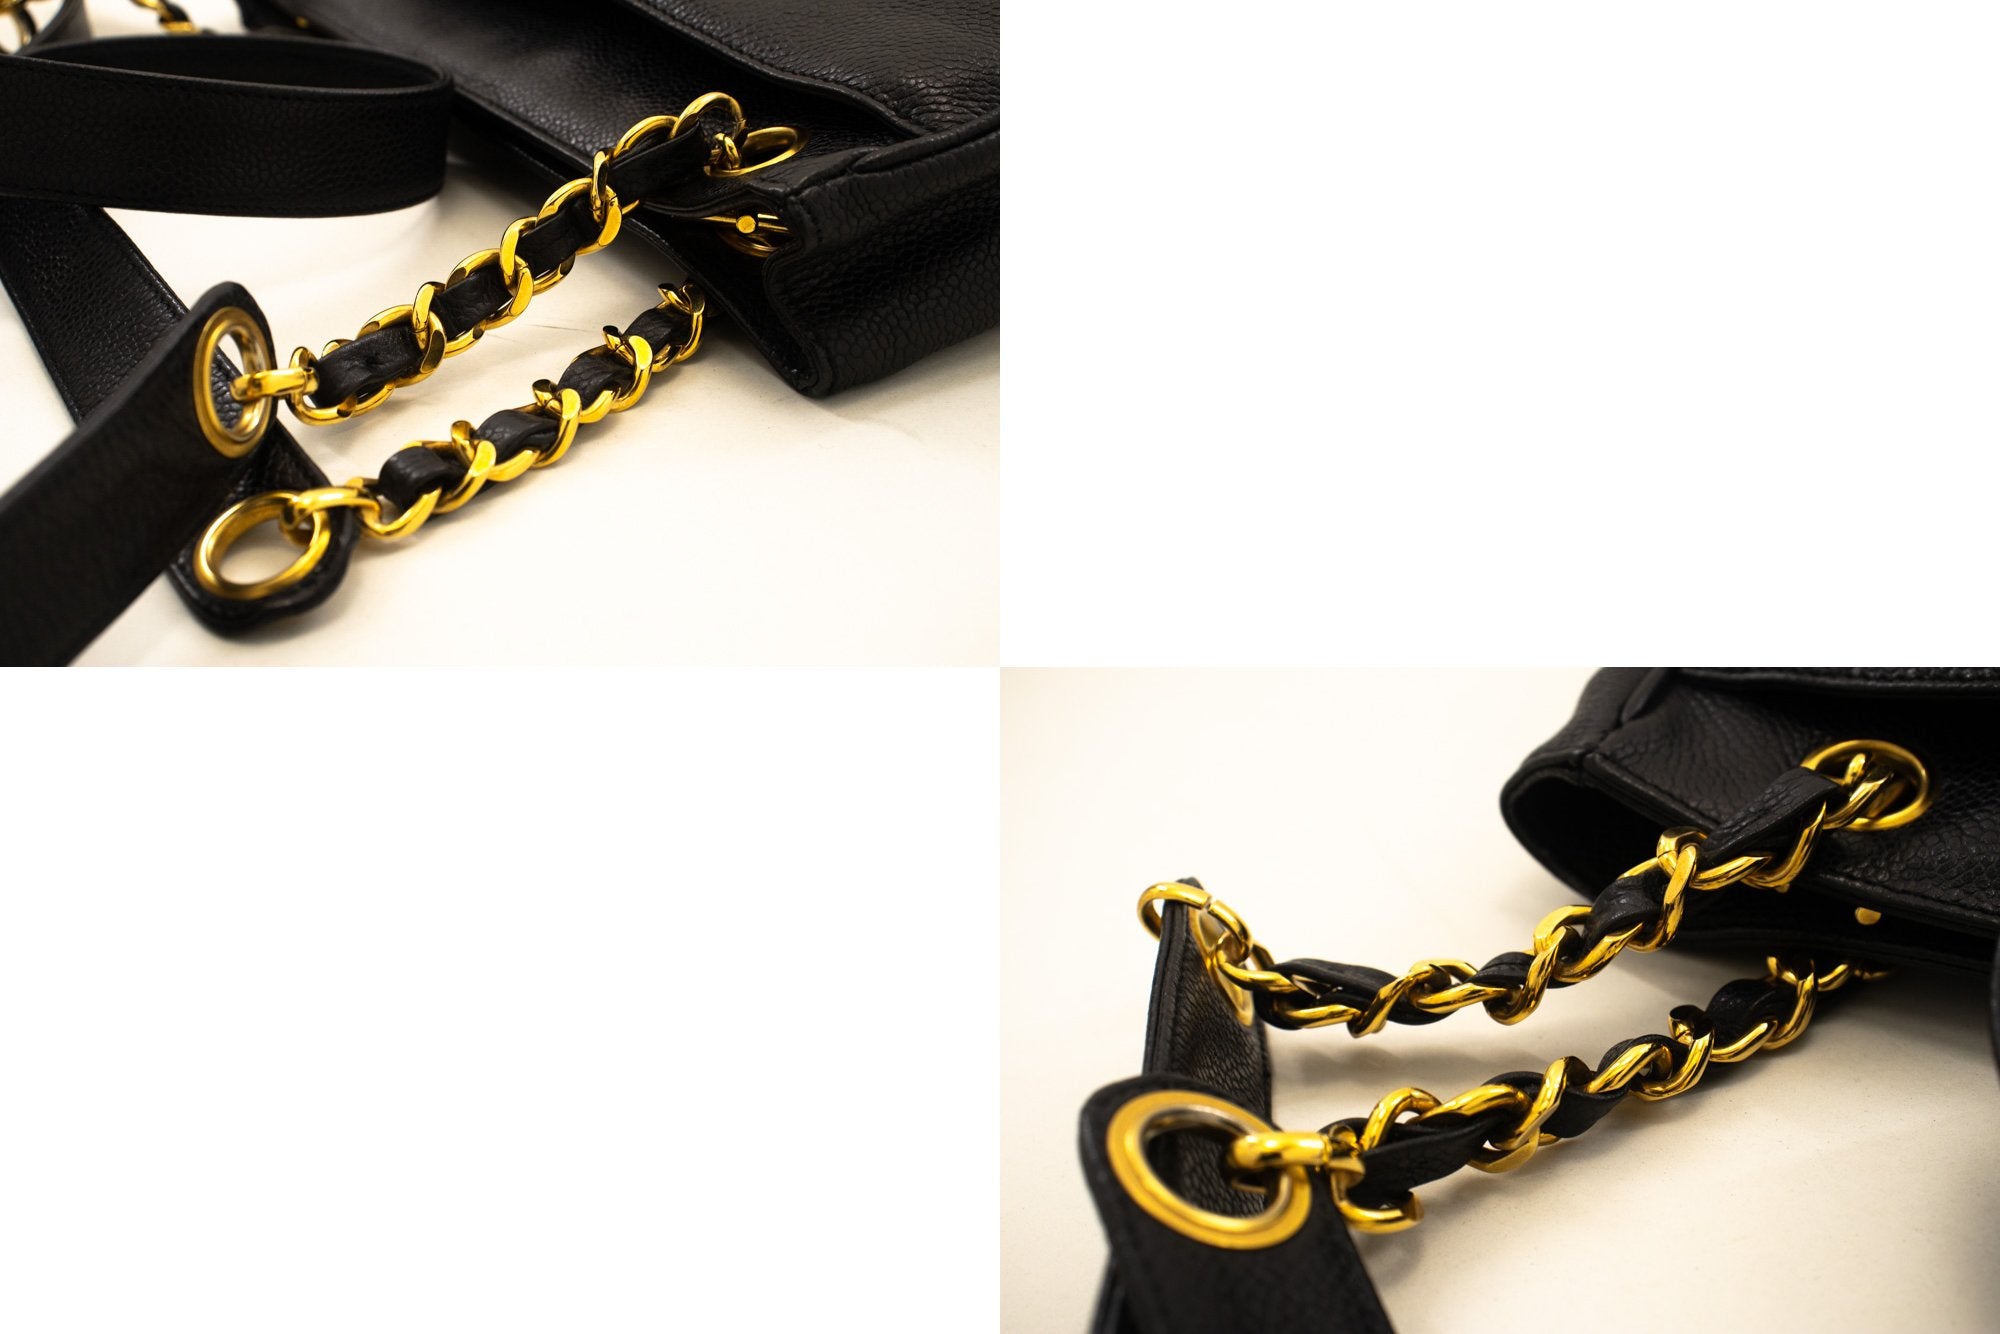 CHANEL Caviar Triple Coco Chain Shoulder Bag Black Leather Gold m25